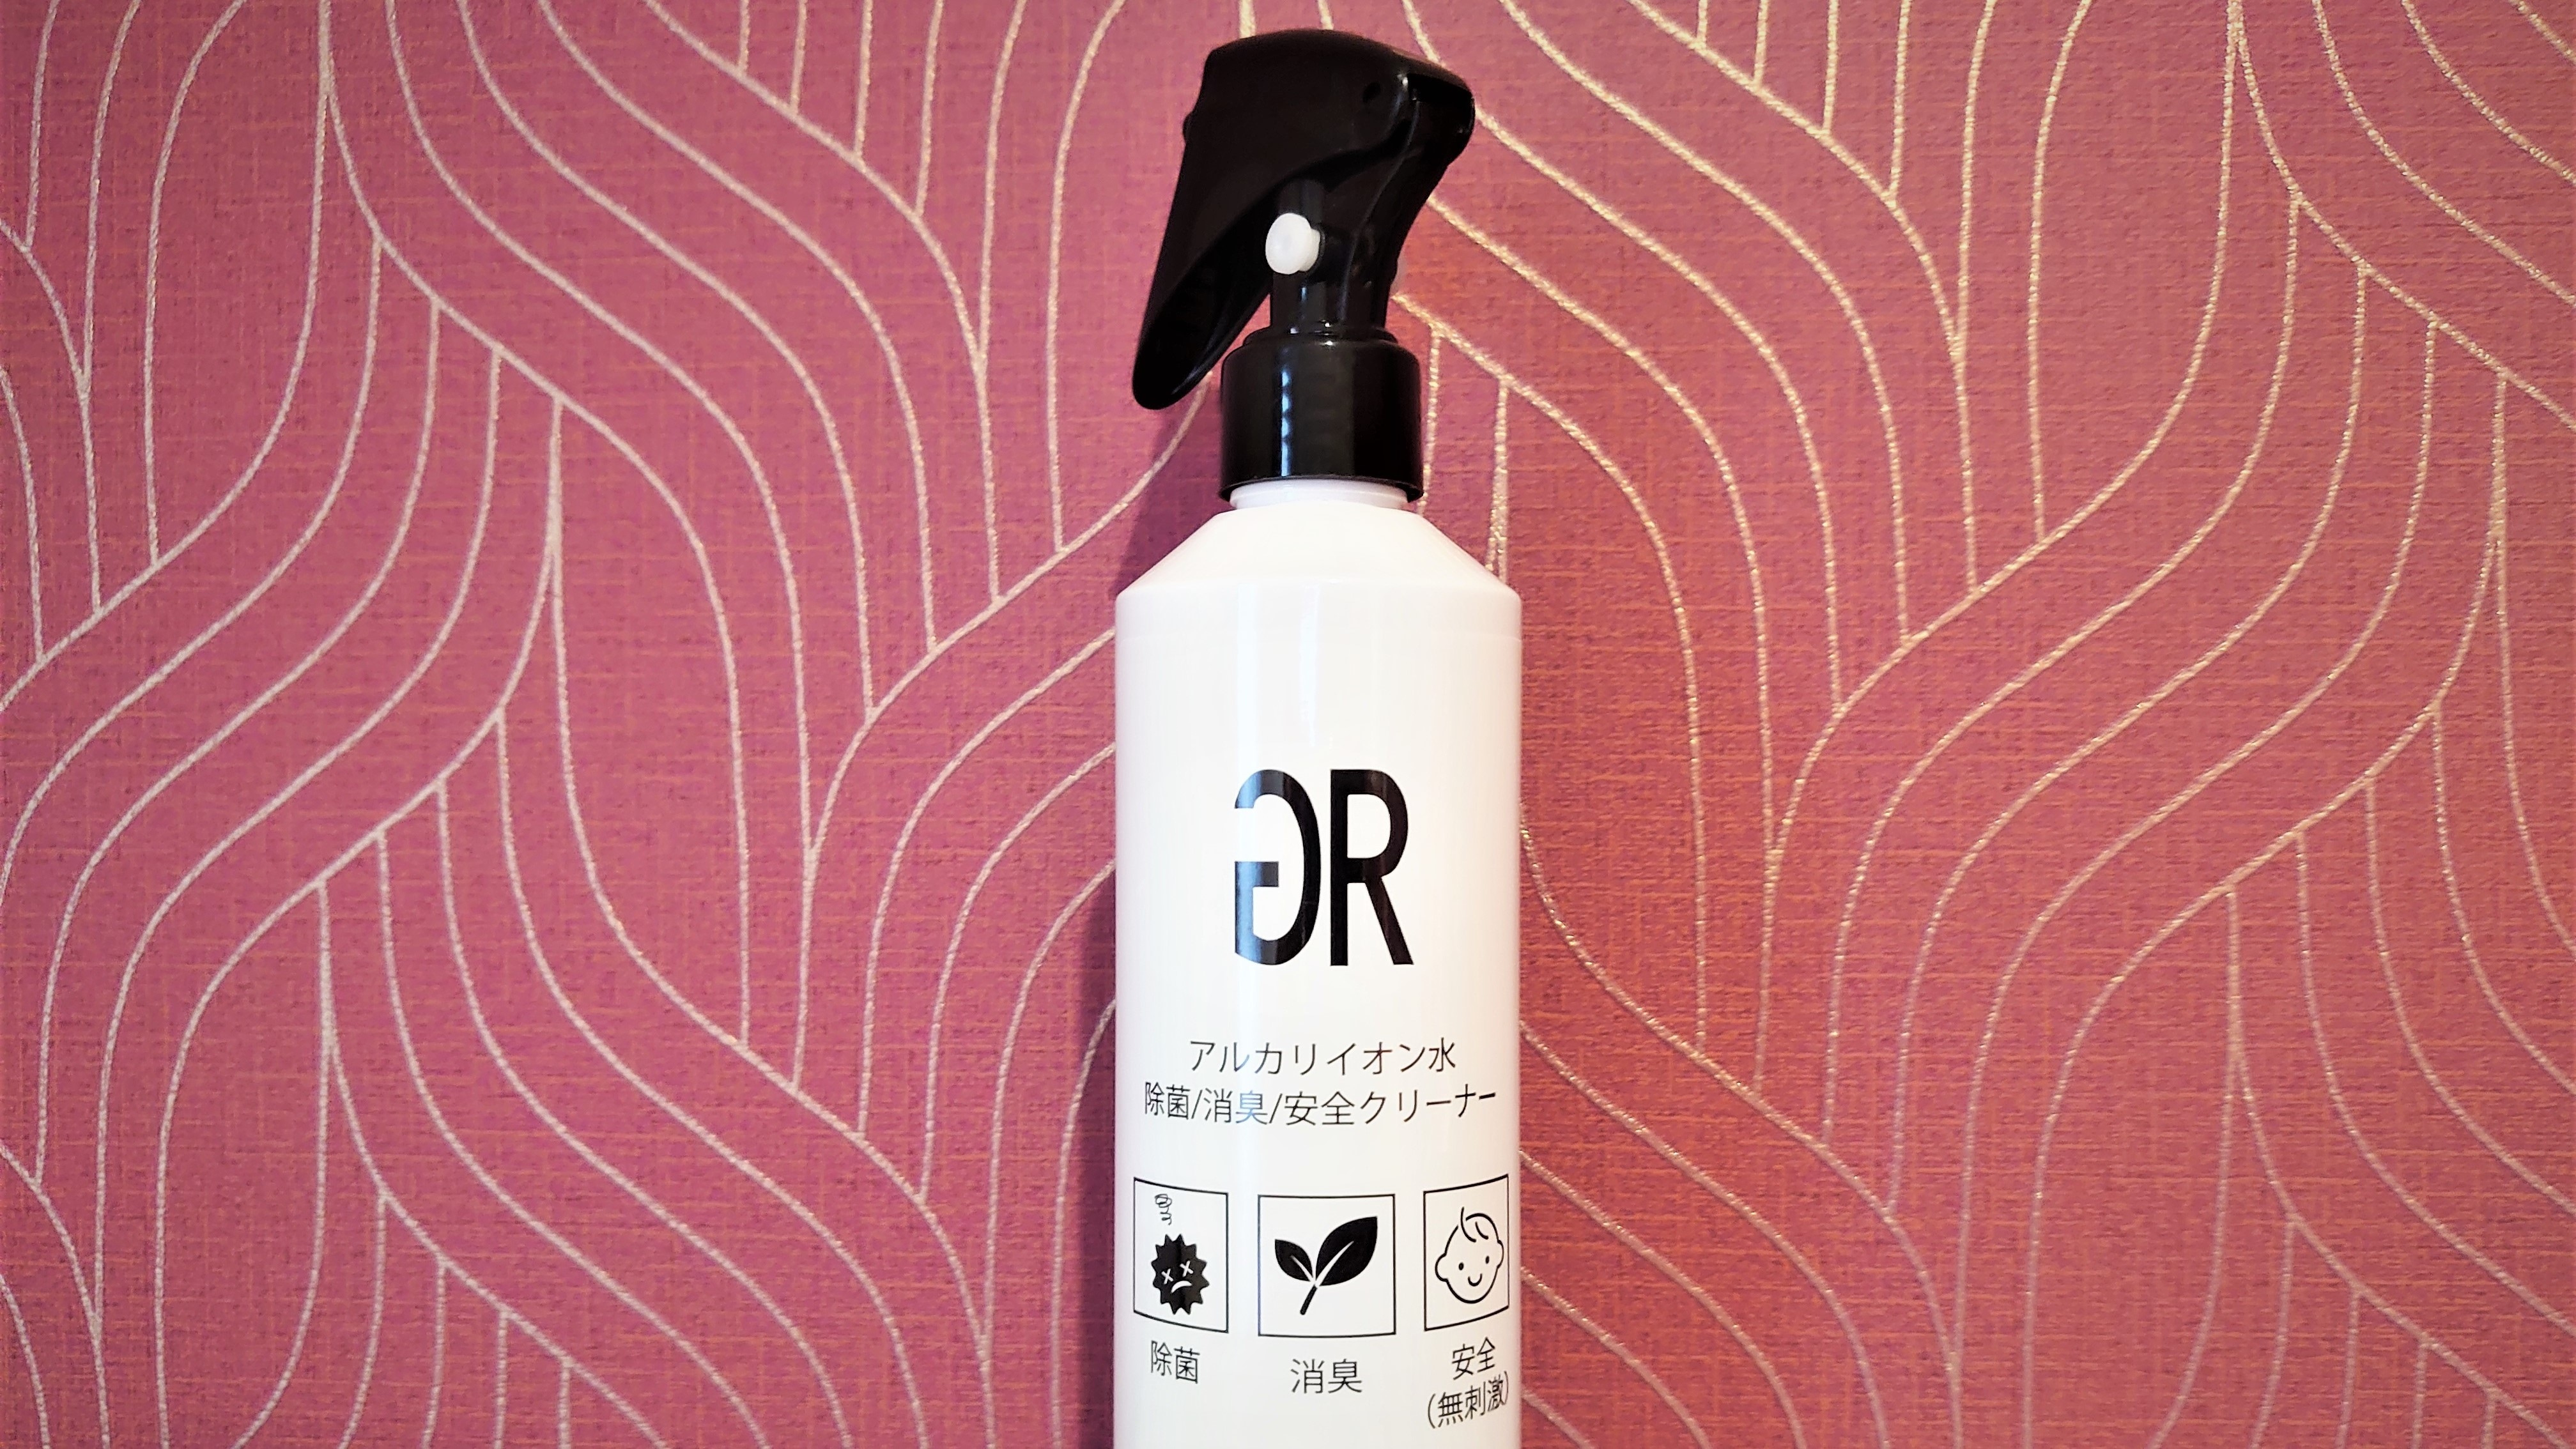 Disinfectant/deodorant spray Alkaline ionized water/safety cleaner